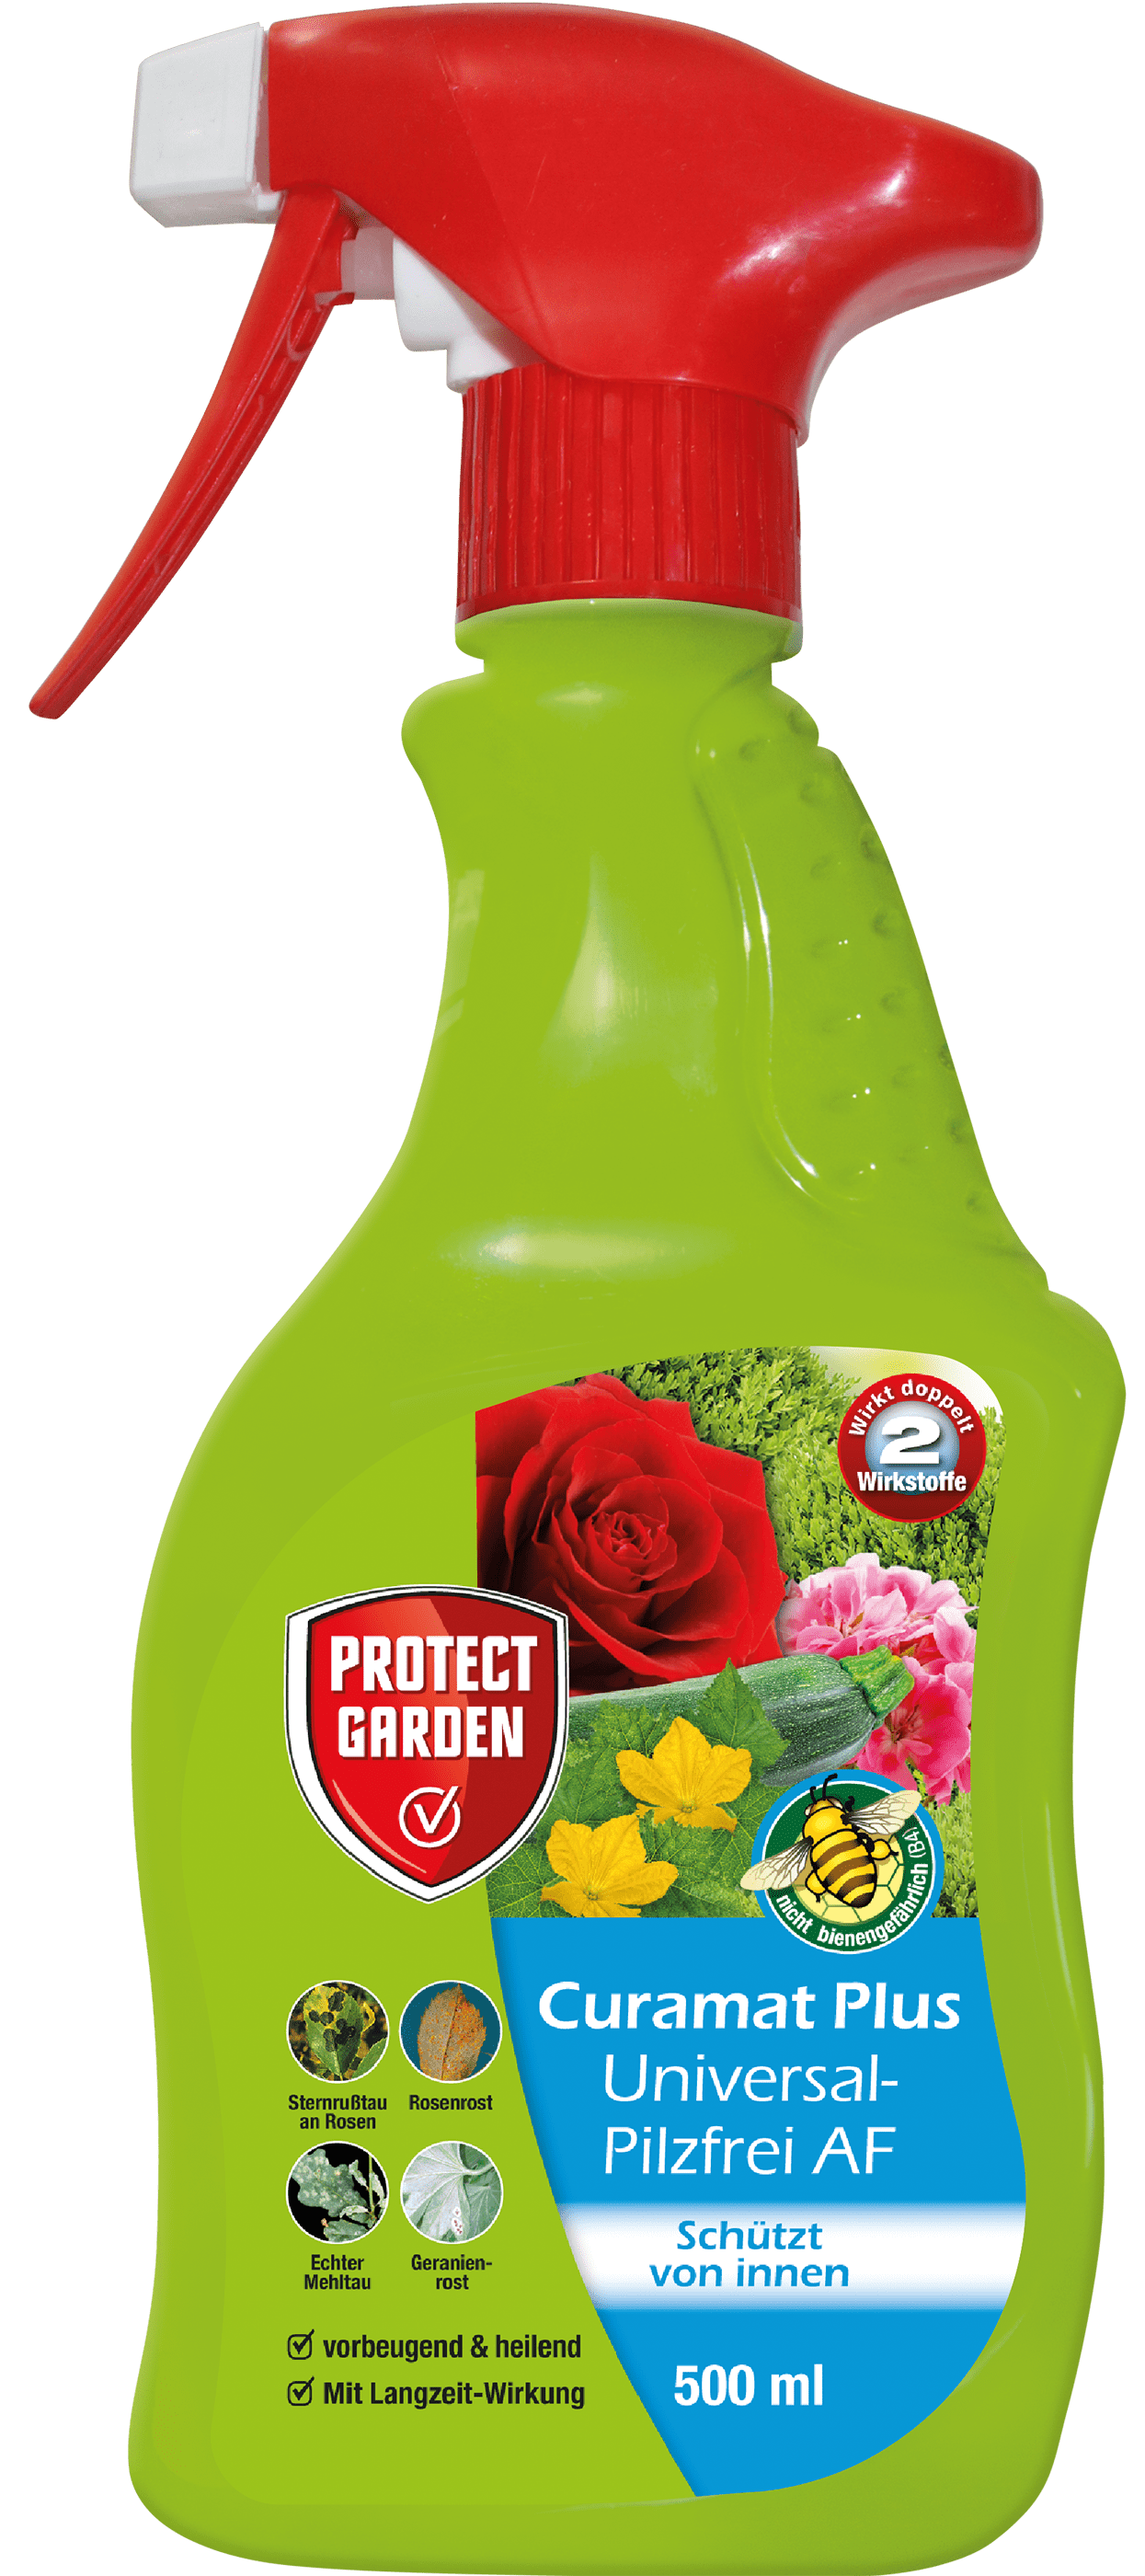 Protect Garden Curamat Plus Universal-Pilzfrei AF 500 ml 